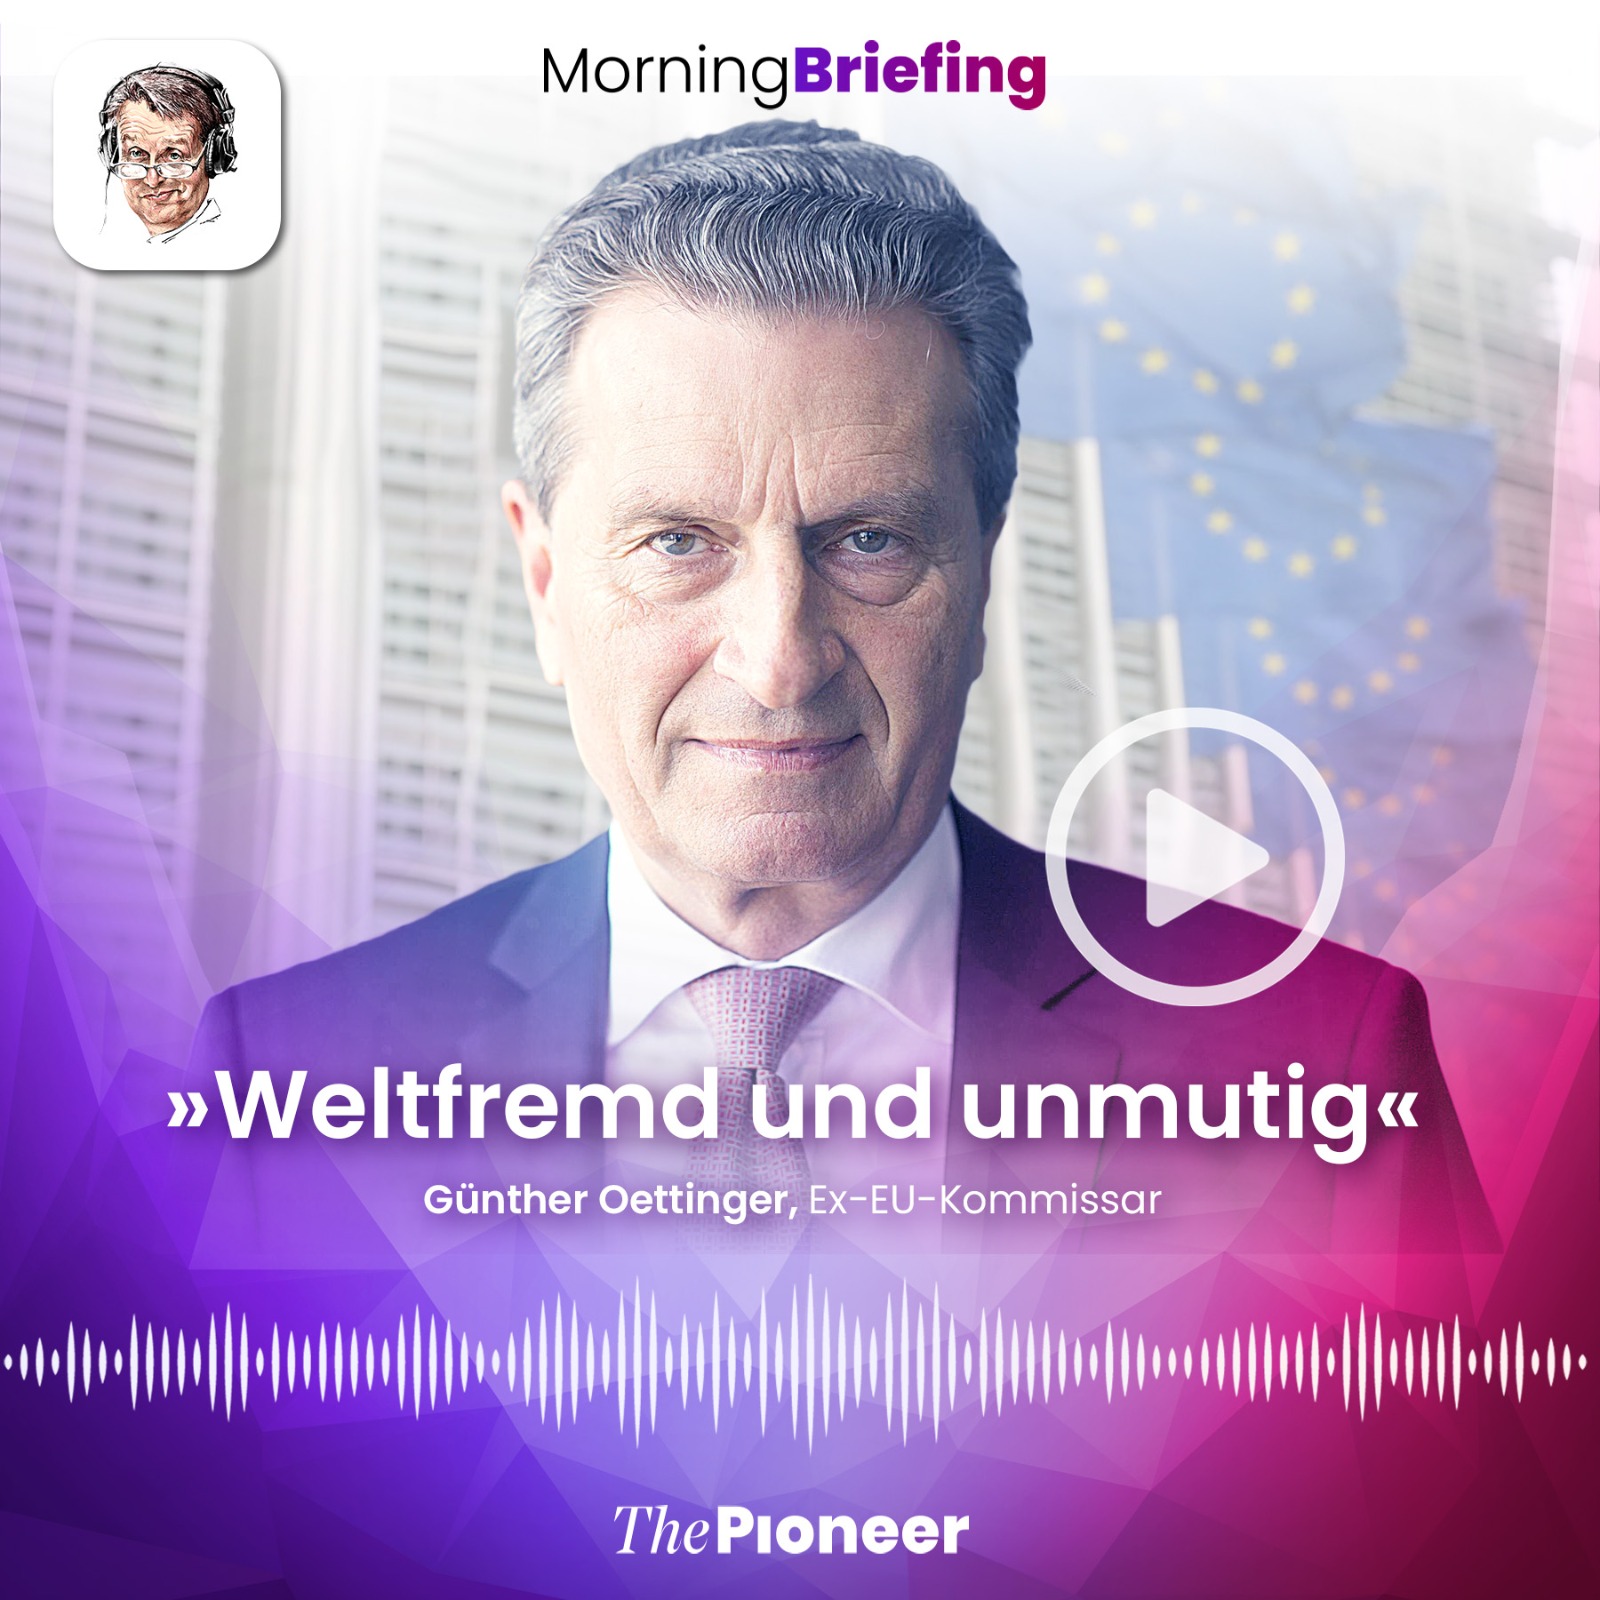 20201123-image-dpa-morning briefing-Kachel Günther Oettinger